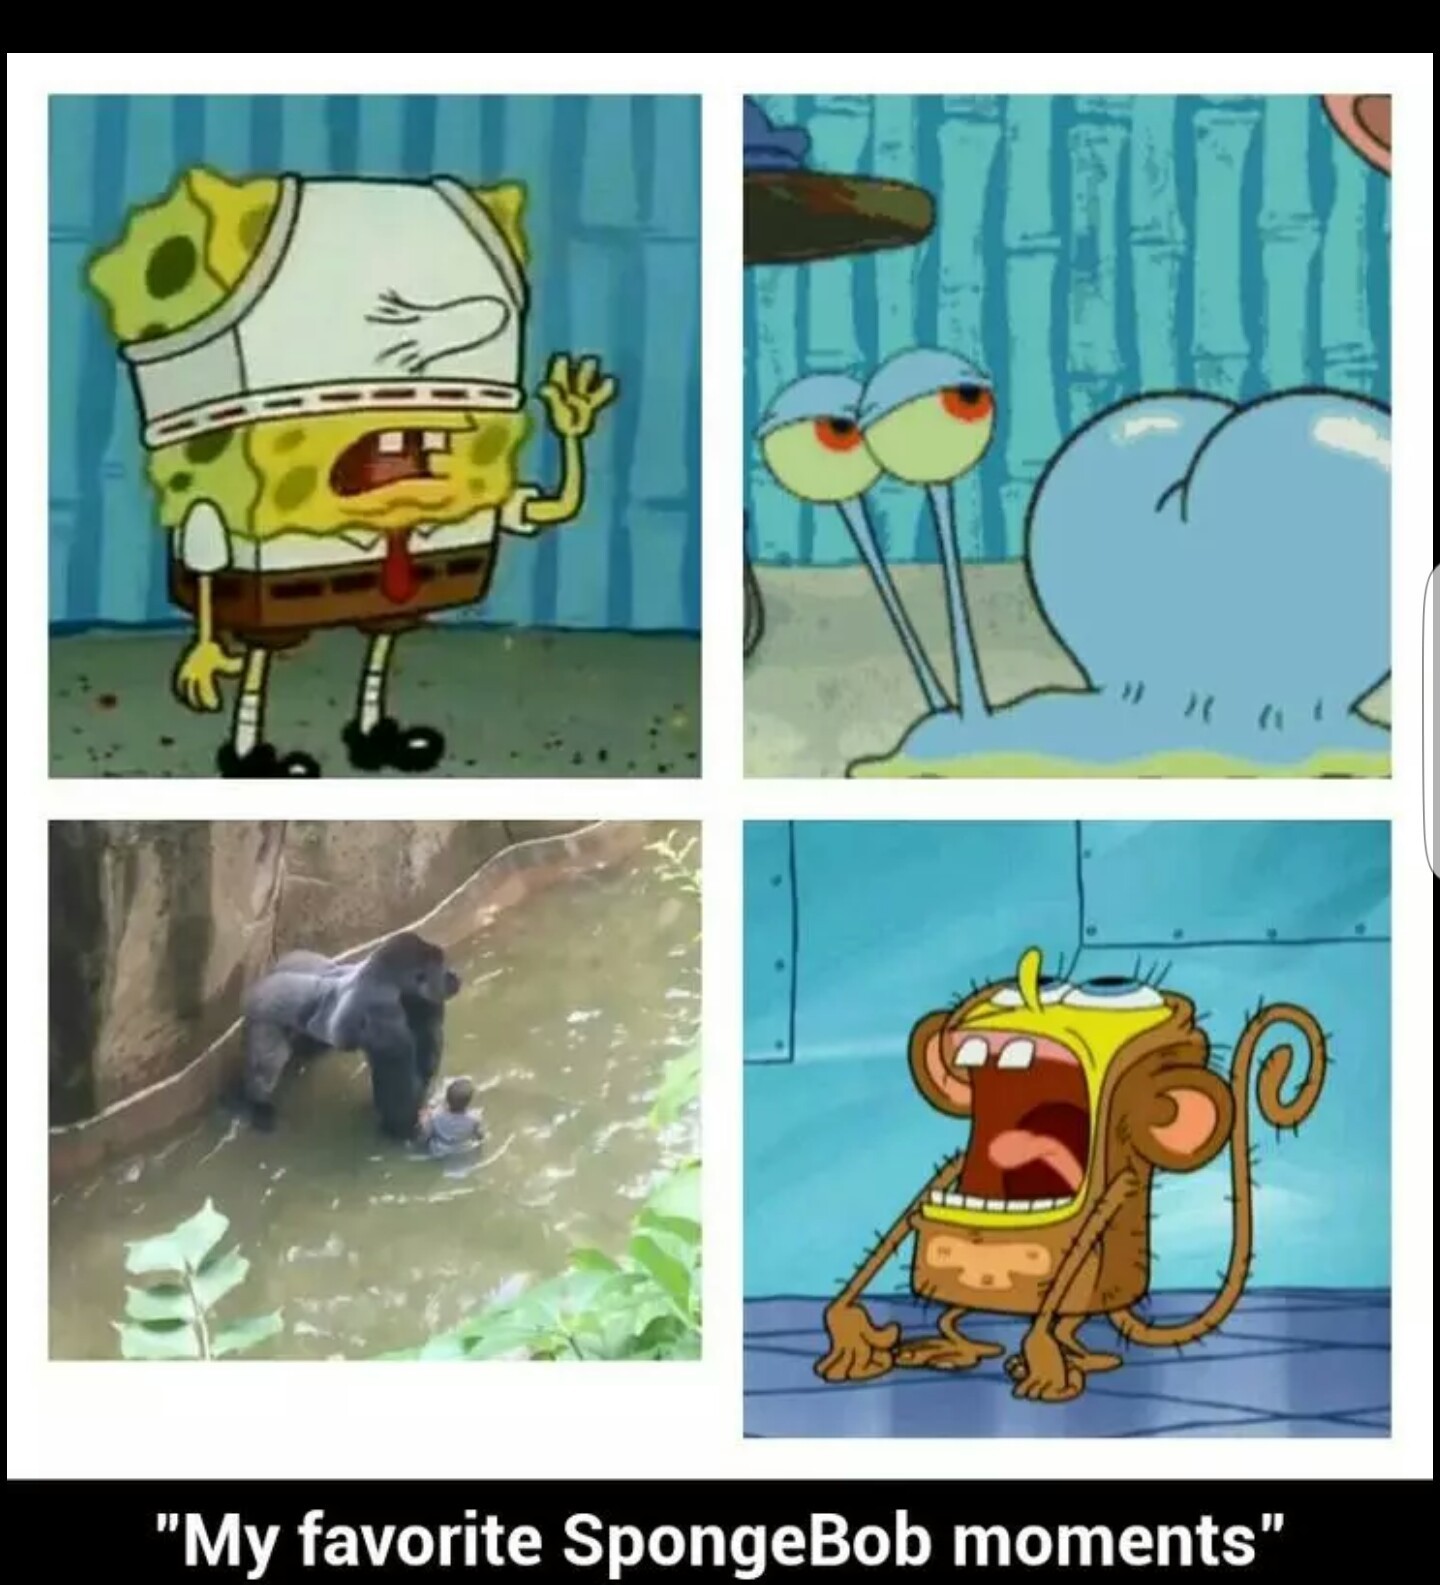 Spongebob Favorite moments - meme.